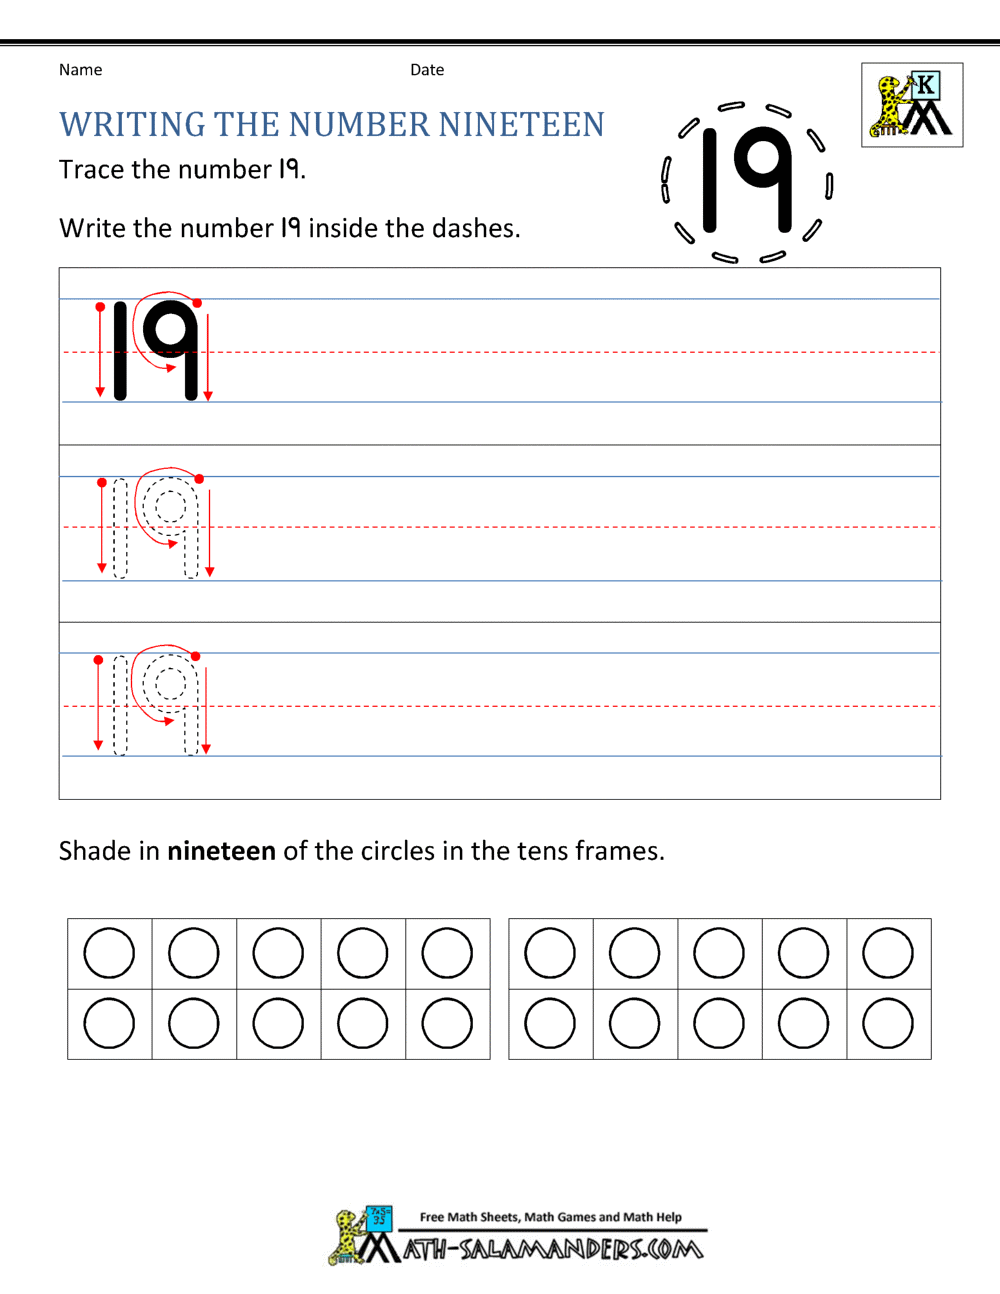 Kindergarten writing worksheets